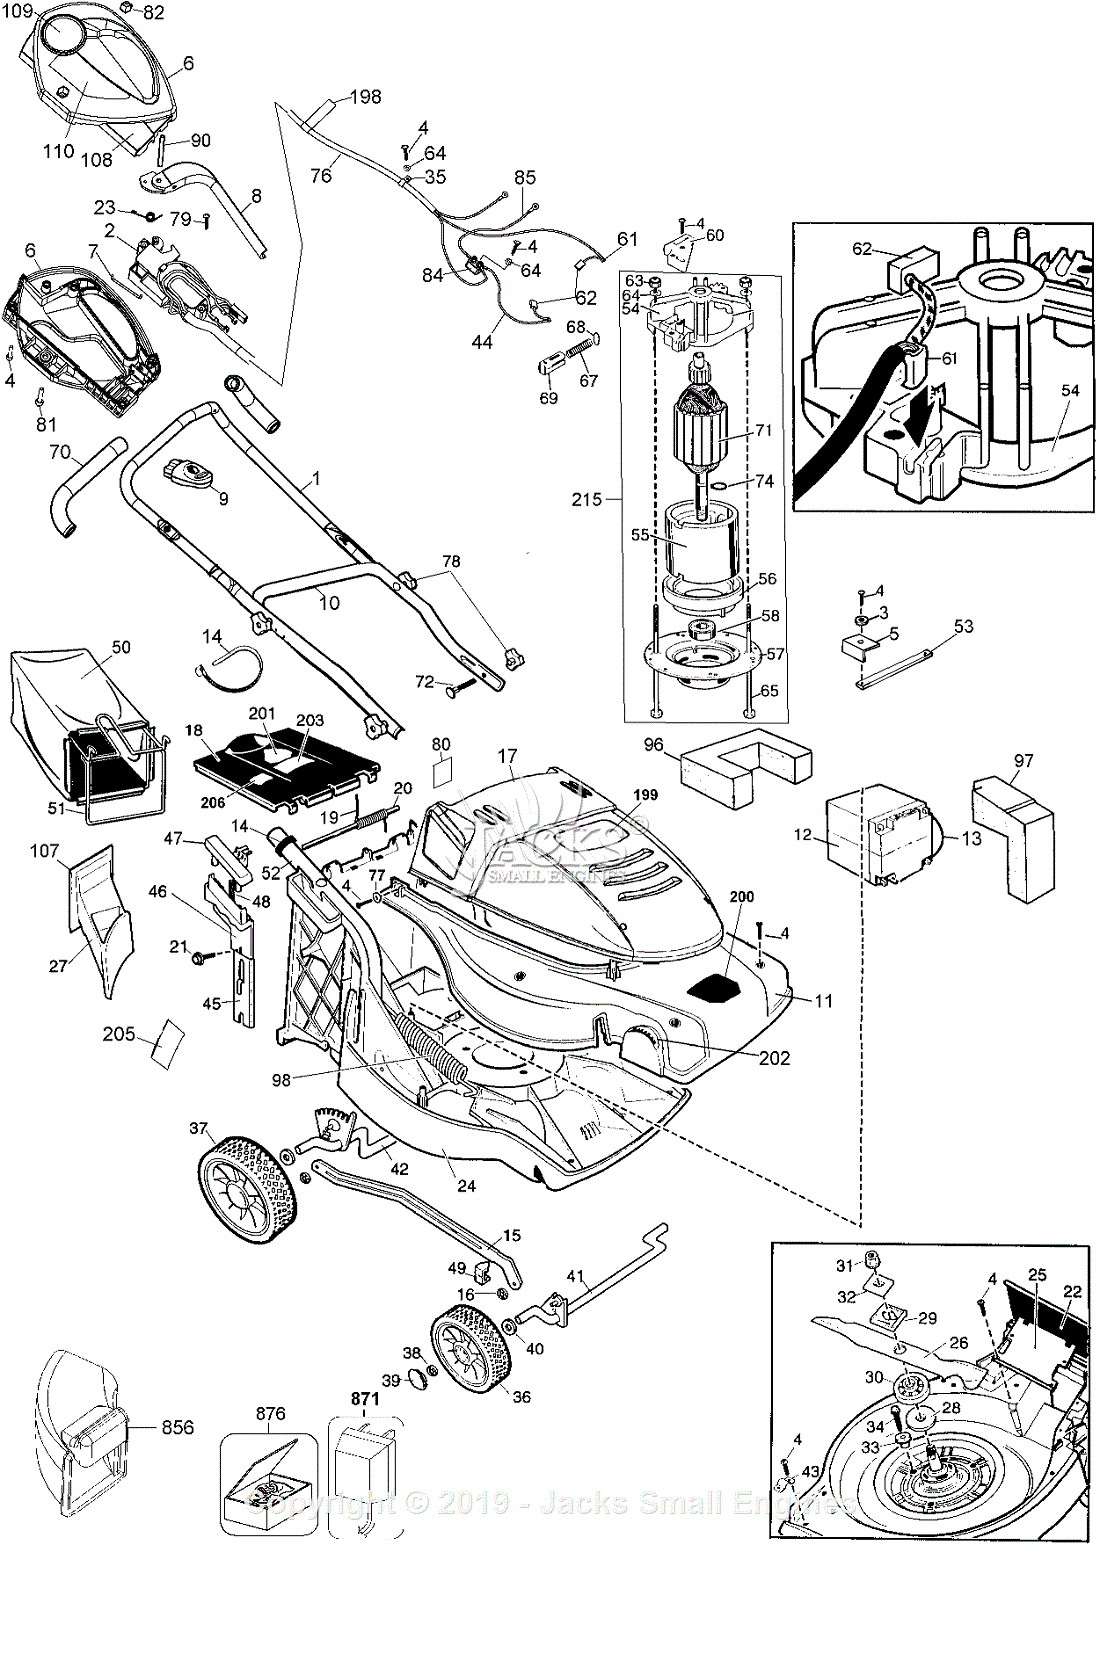 Black & Decker CMM1200 Type 2 Parts Diagrams